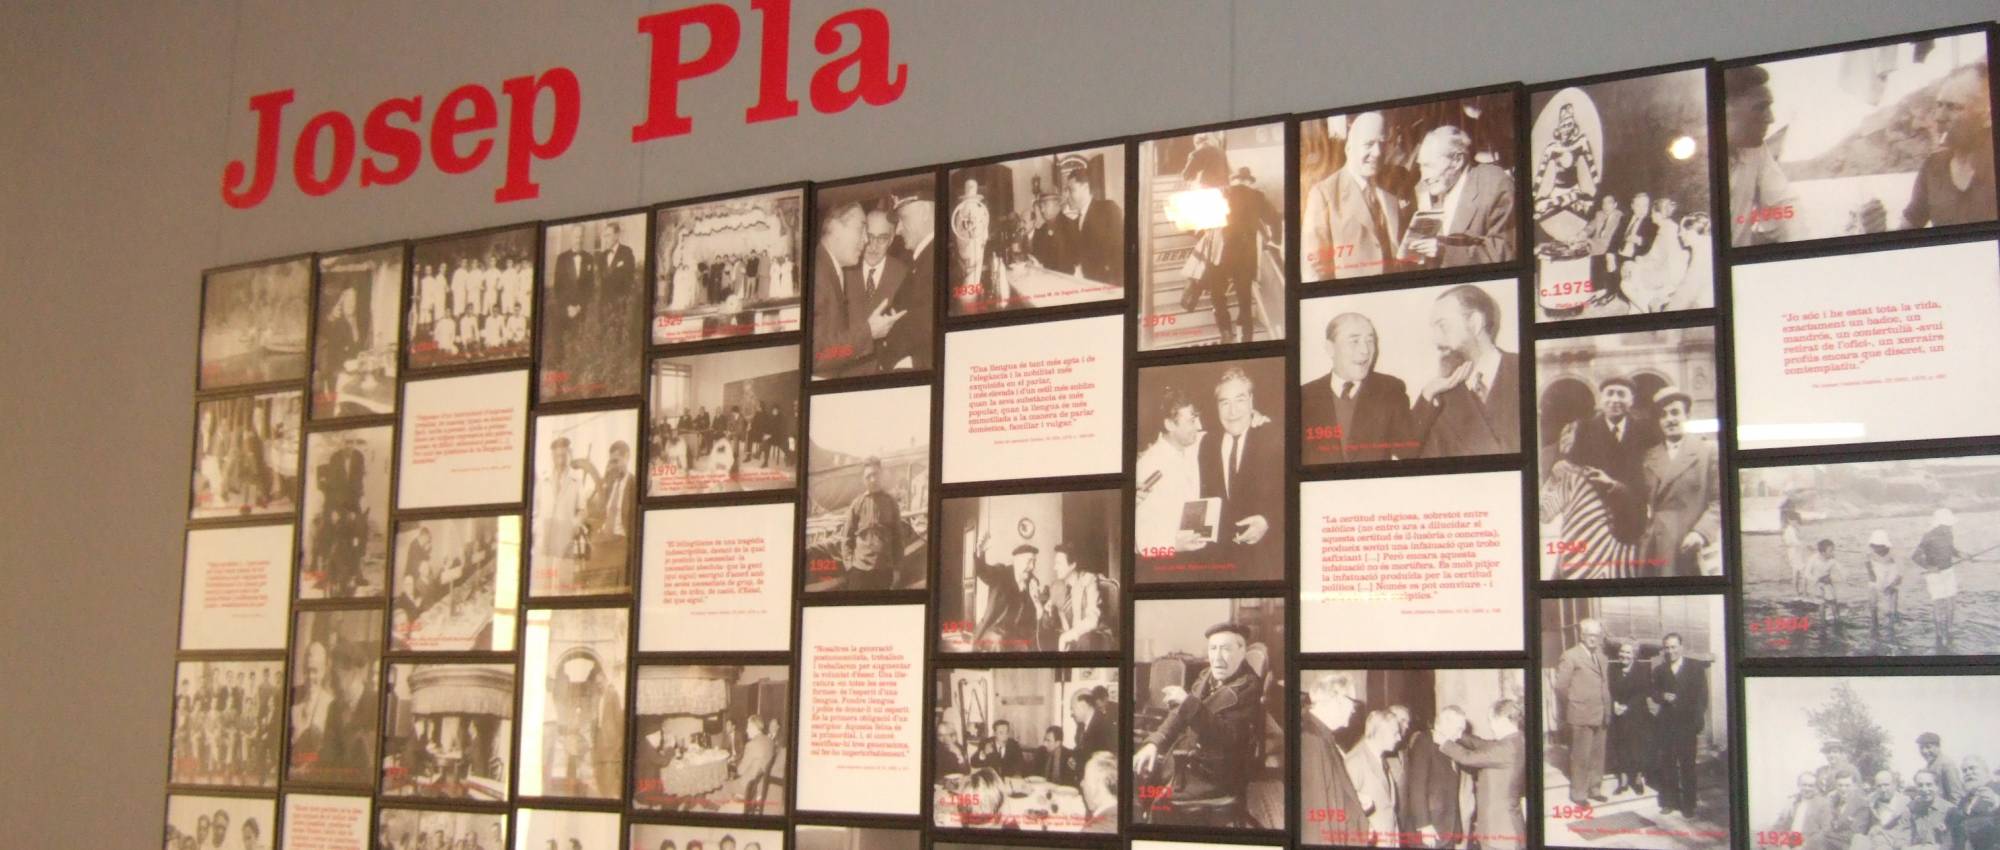 Start of the permanent exhibition Josep Pla (1897 – 1981). Davidpar / Wikimedia Commons. CC BY-SA 3.0